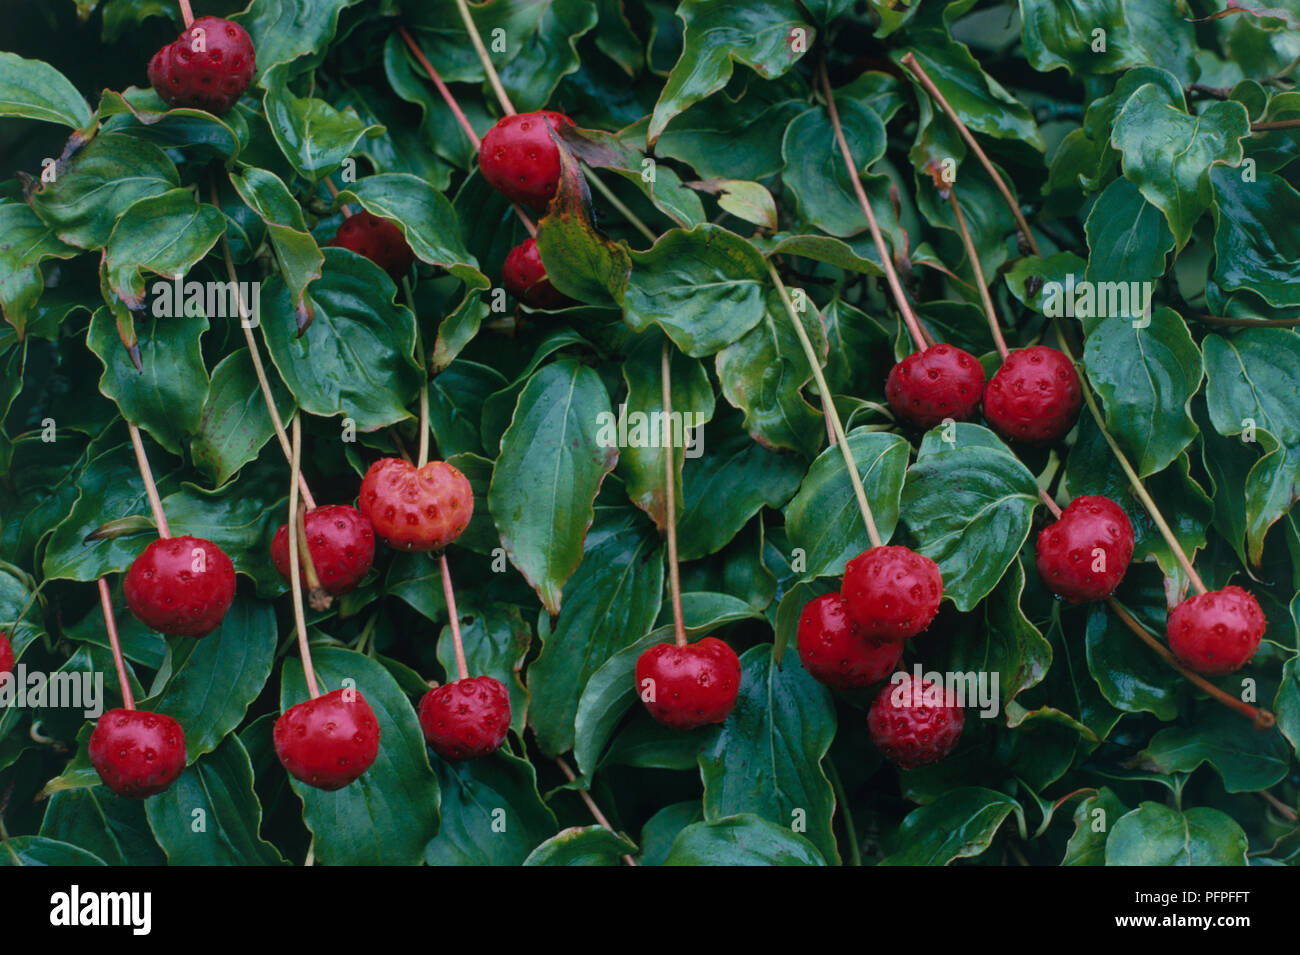 Cornus kousa (Japanese Dogwood, Kousa Dogwood) red berry fruit hanging on long stems and green leaves, close-up Stock Photo